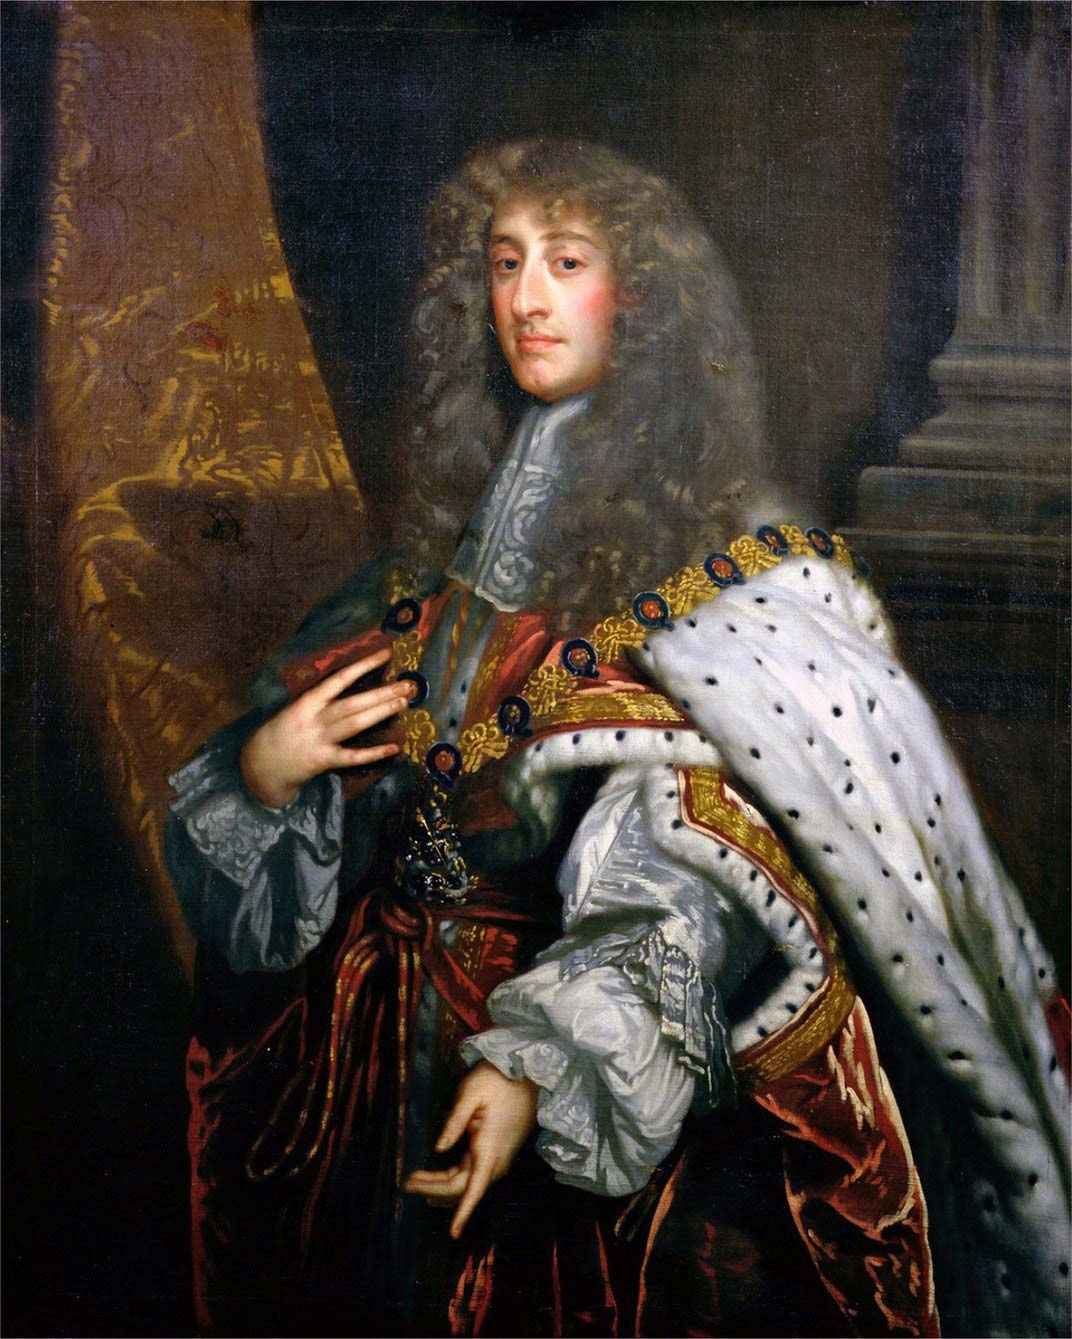 Герцог Джеймс II, будущий король Англии Яков II